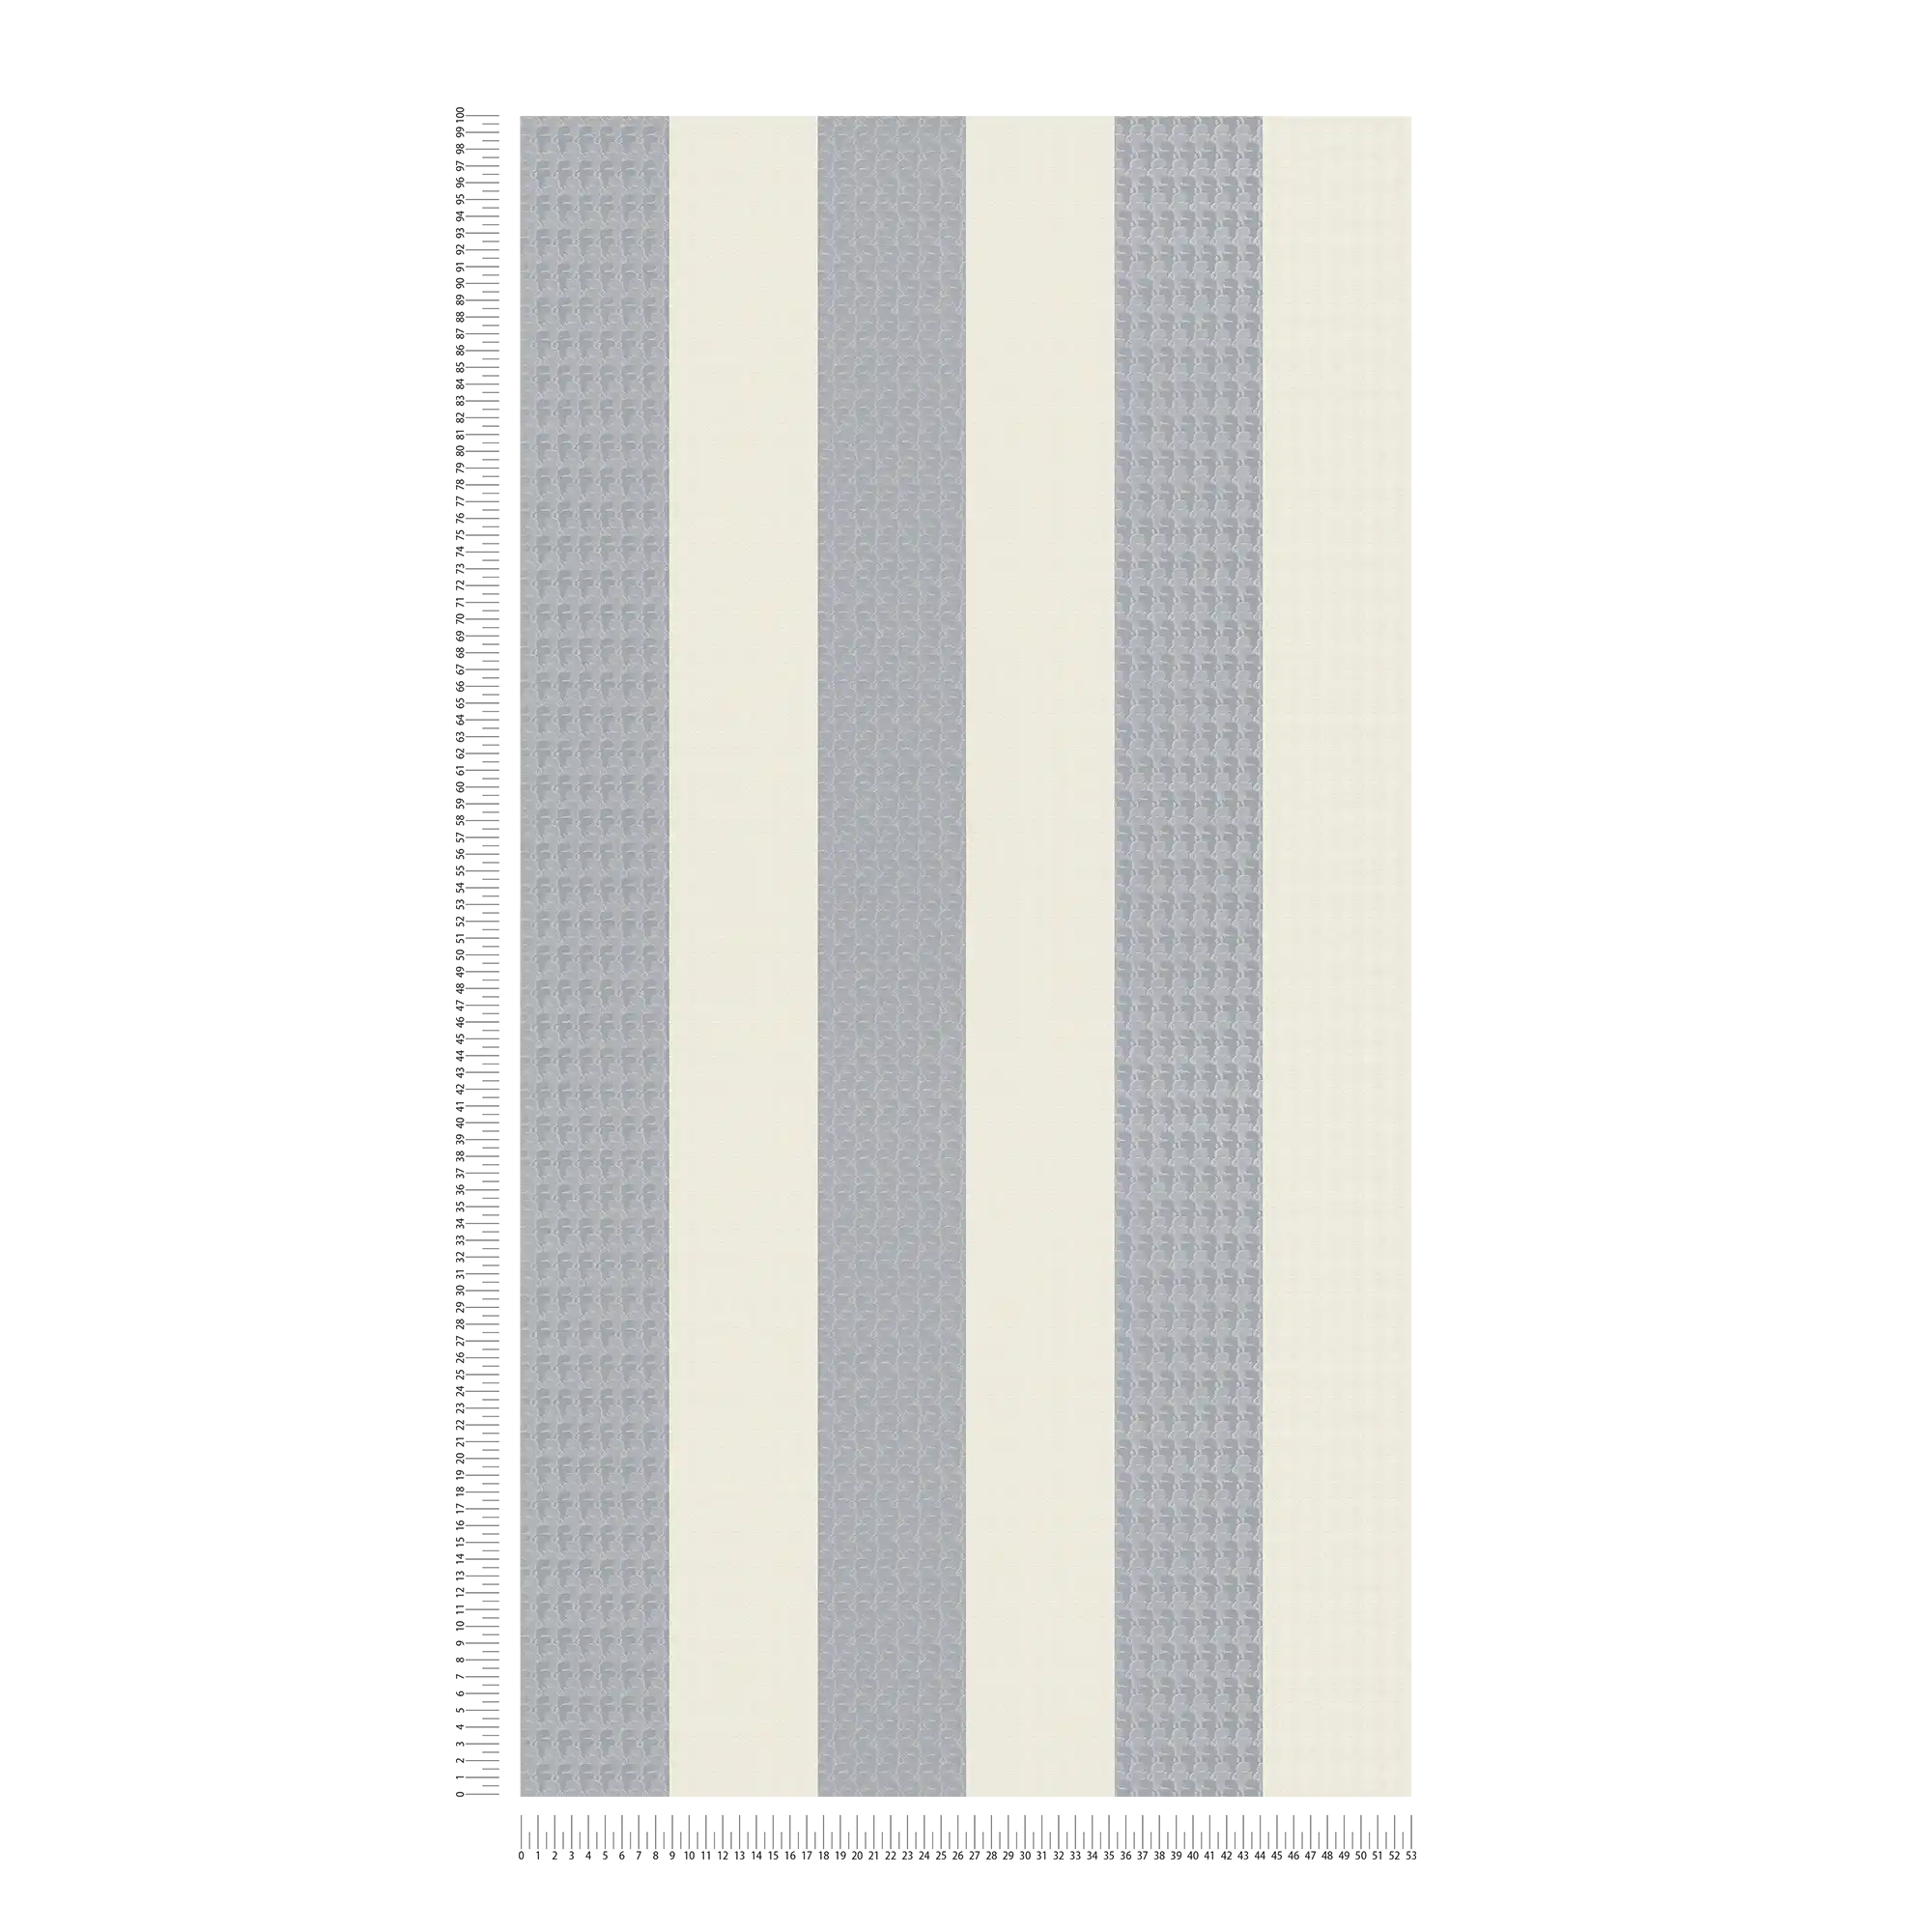             Wallpaper Karl LAGERFELD stripes & texture pattern - cream, grey
        